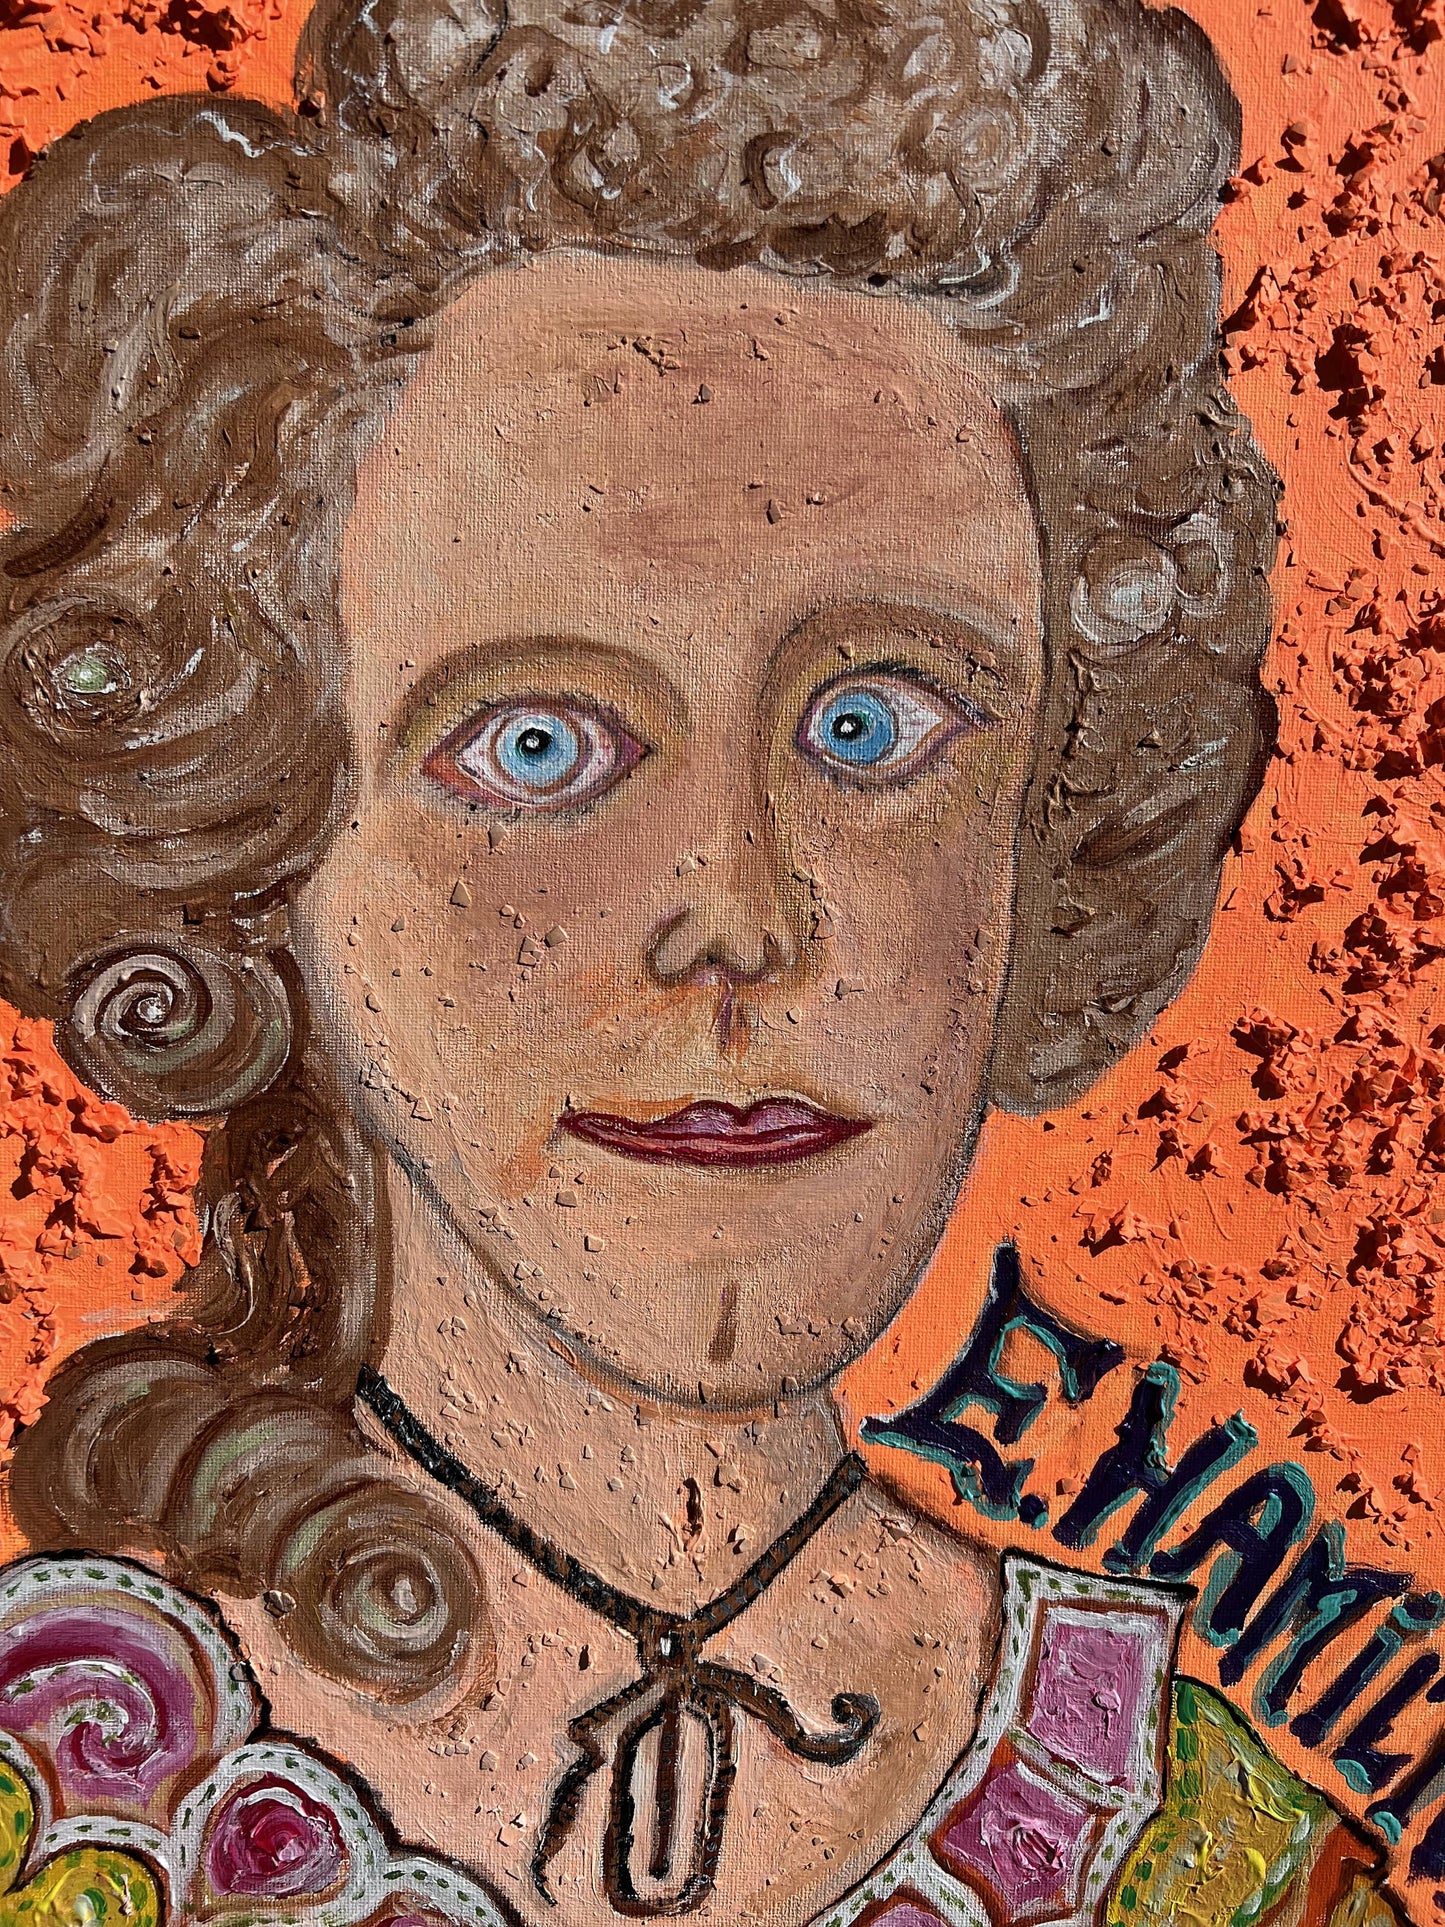 Textured Painting on Canvas by Serg Graff Portrait of Elizabeth Hamilton